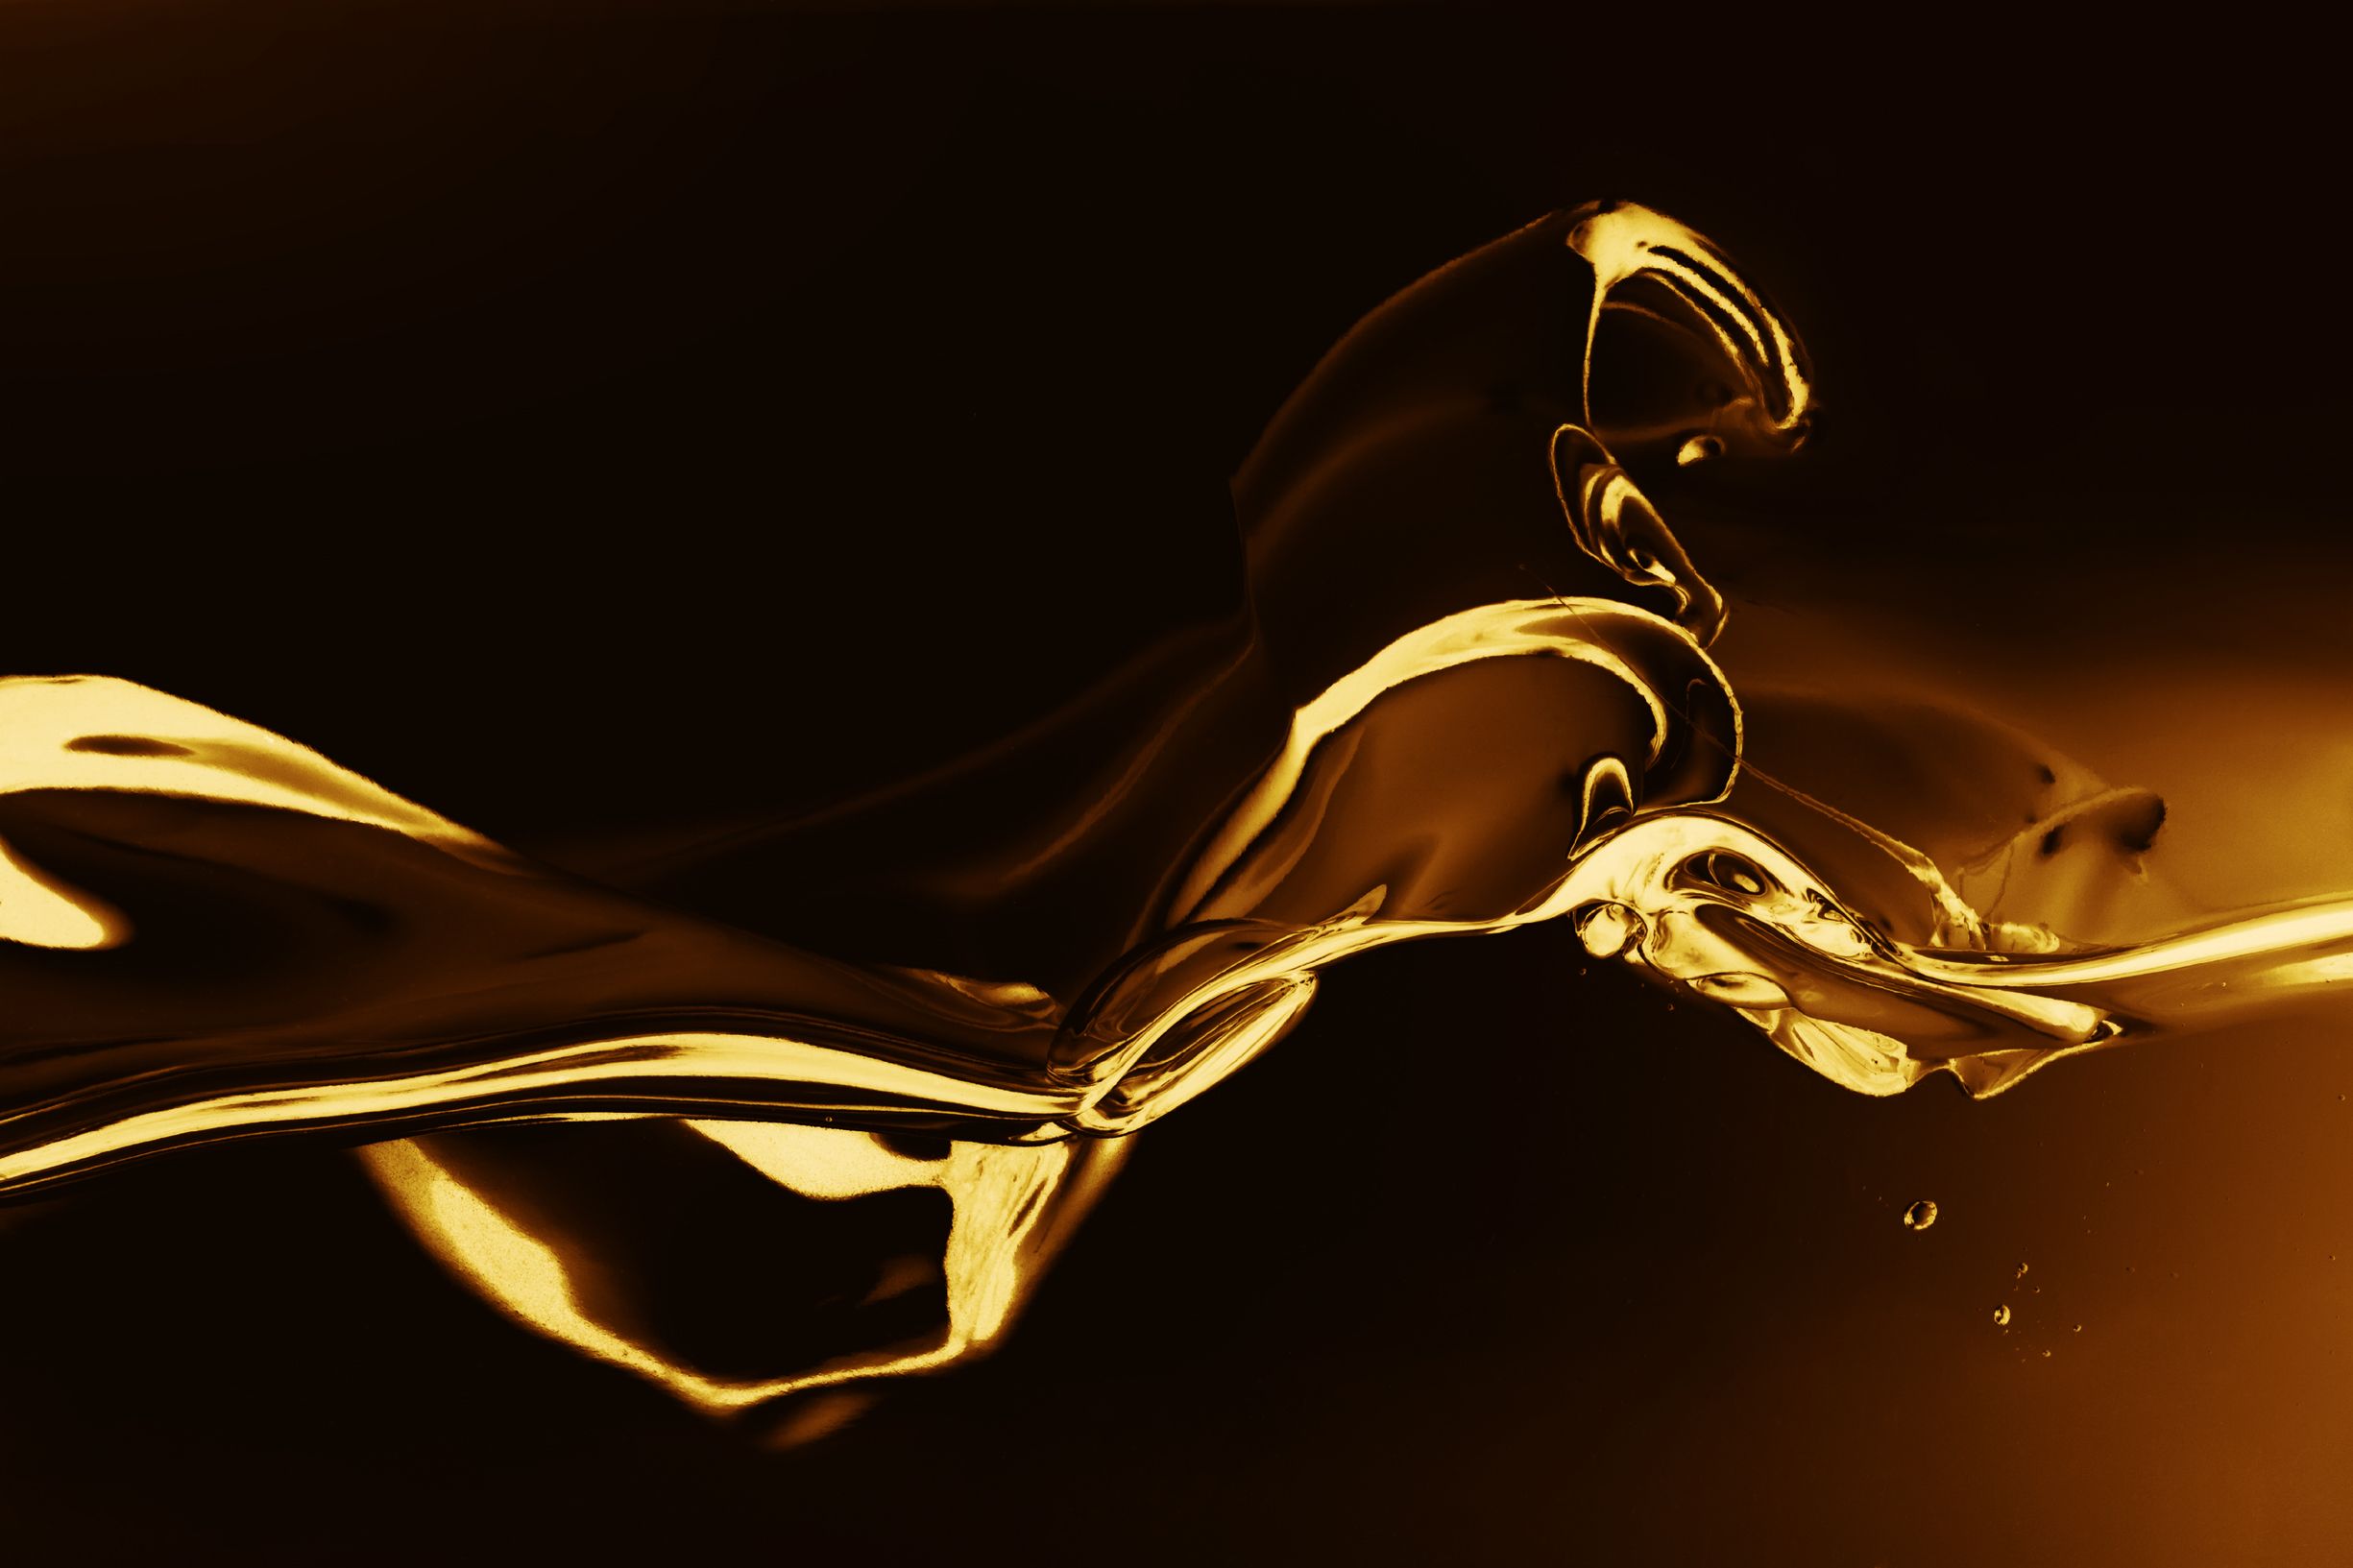 liquid gold background